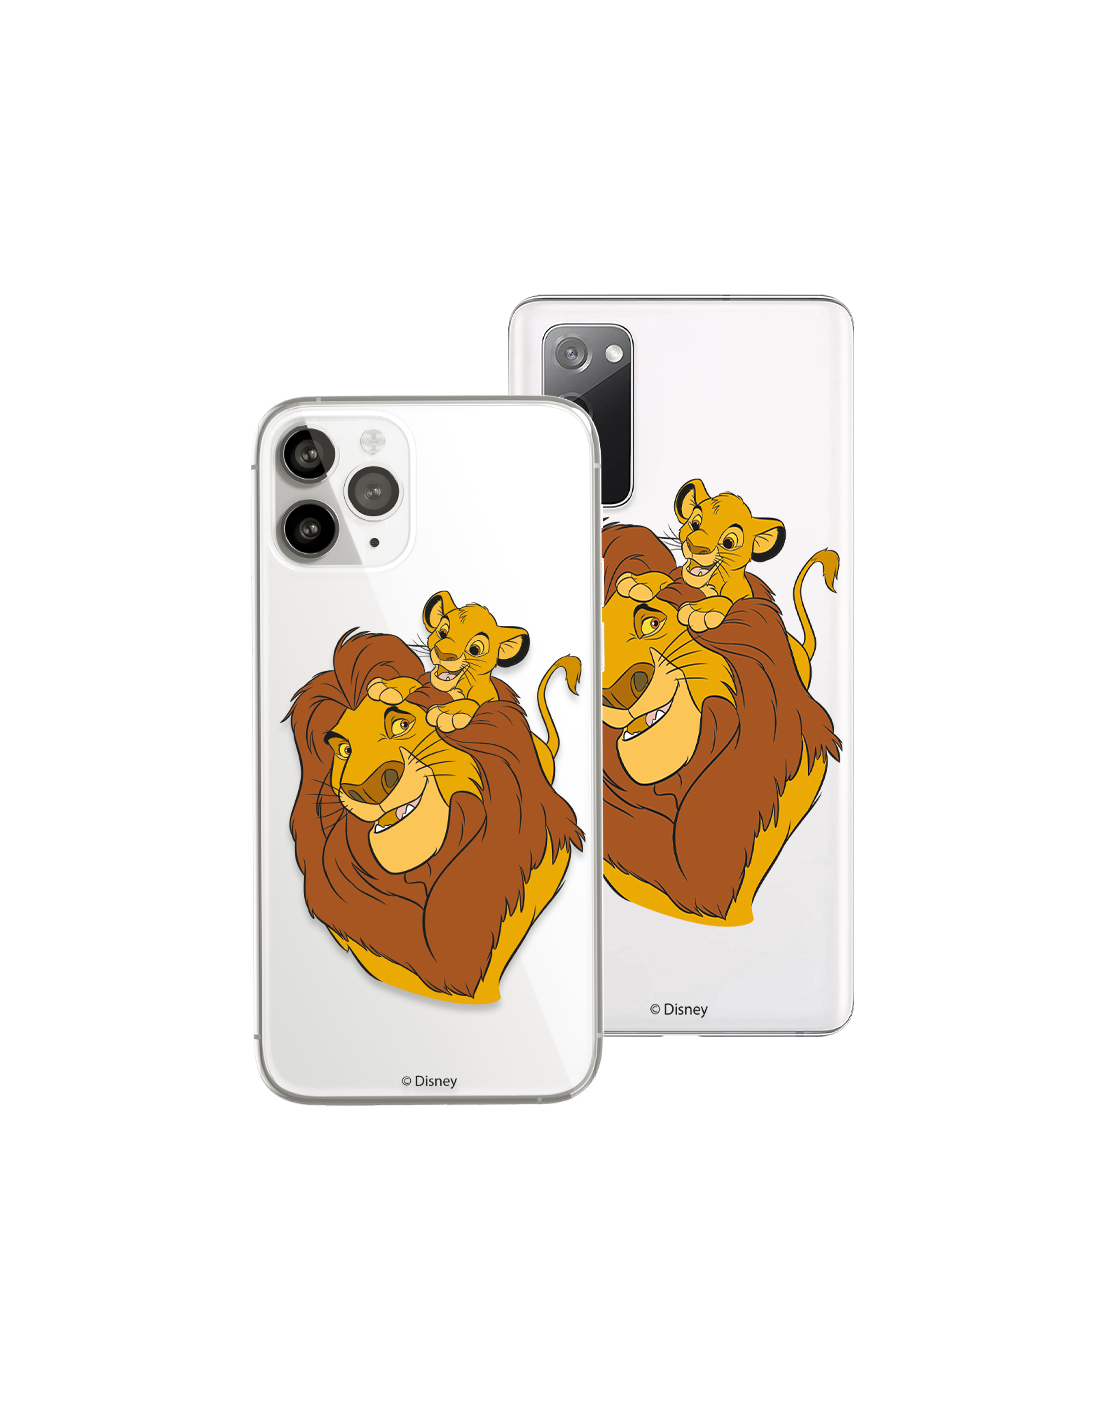 Funda para Nothing Phone 1 Oficial de Disney Simba y Nala Silueta